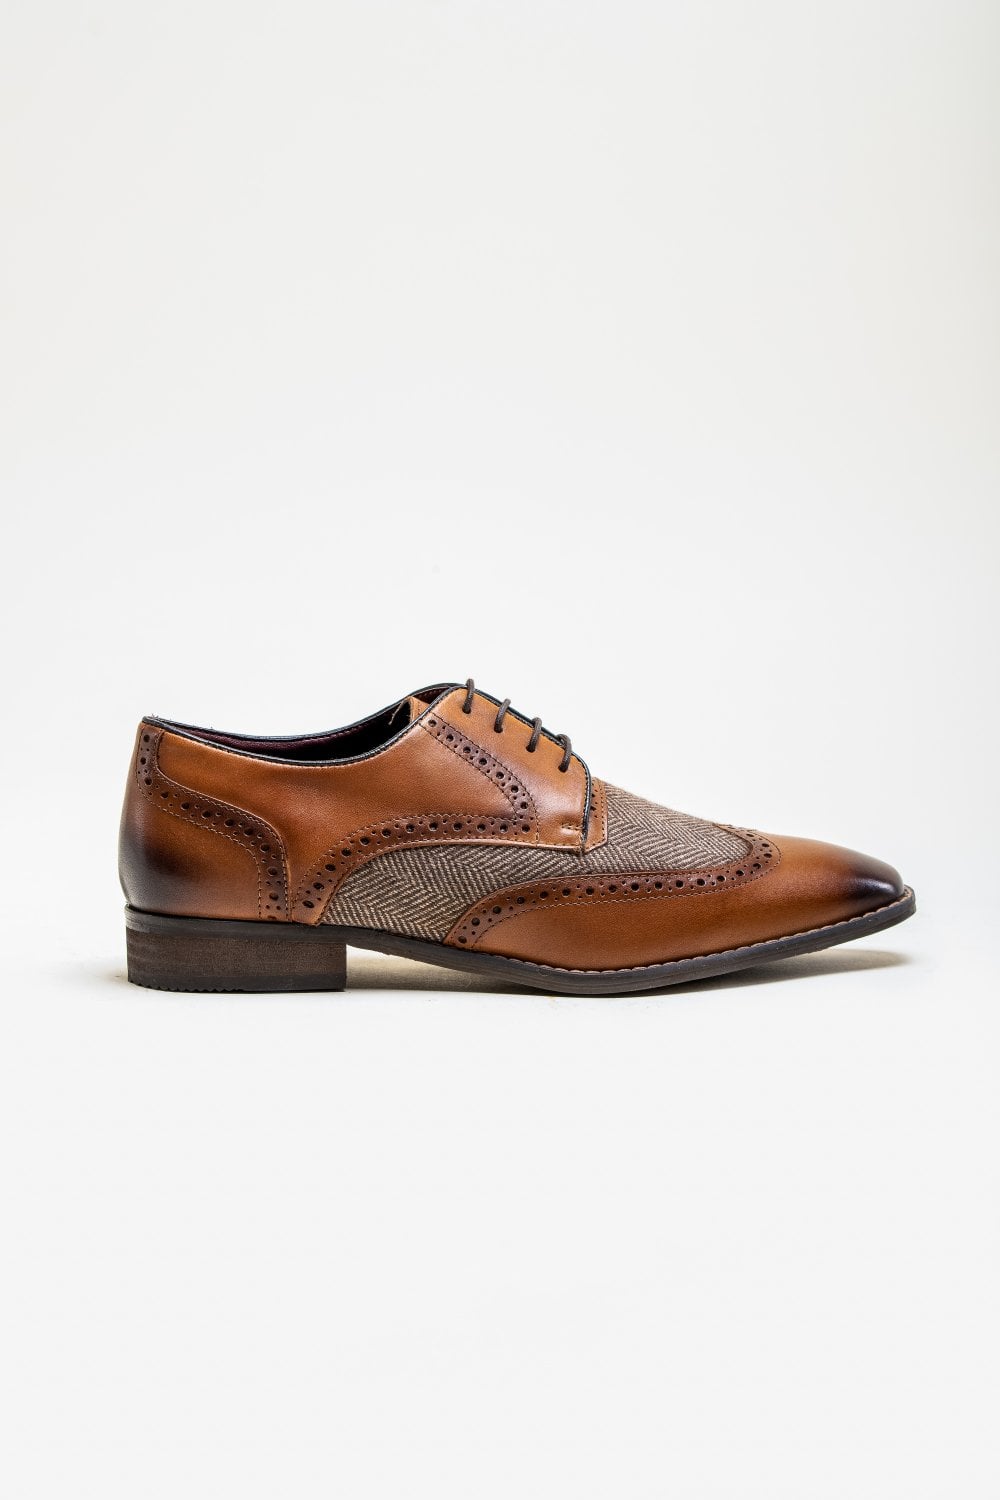 Cavani Faro Tweed Schuhe - Braun - schoenen